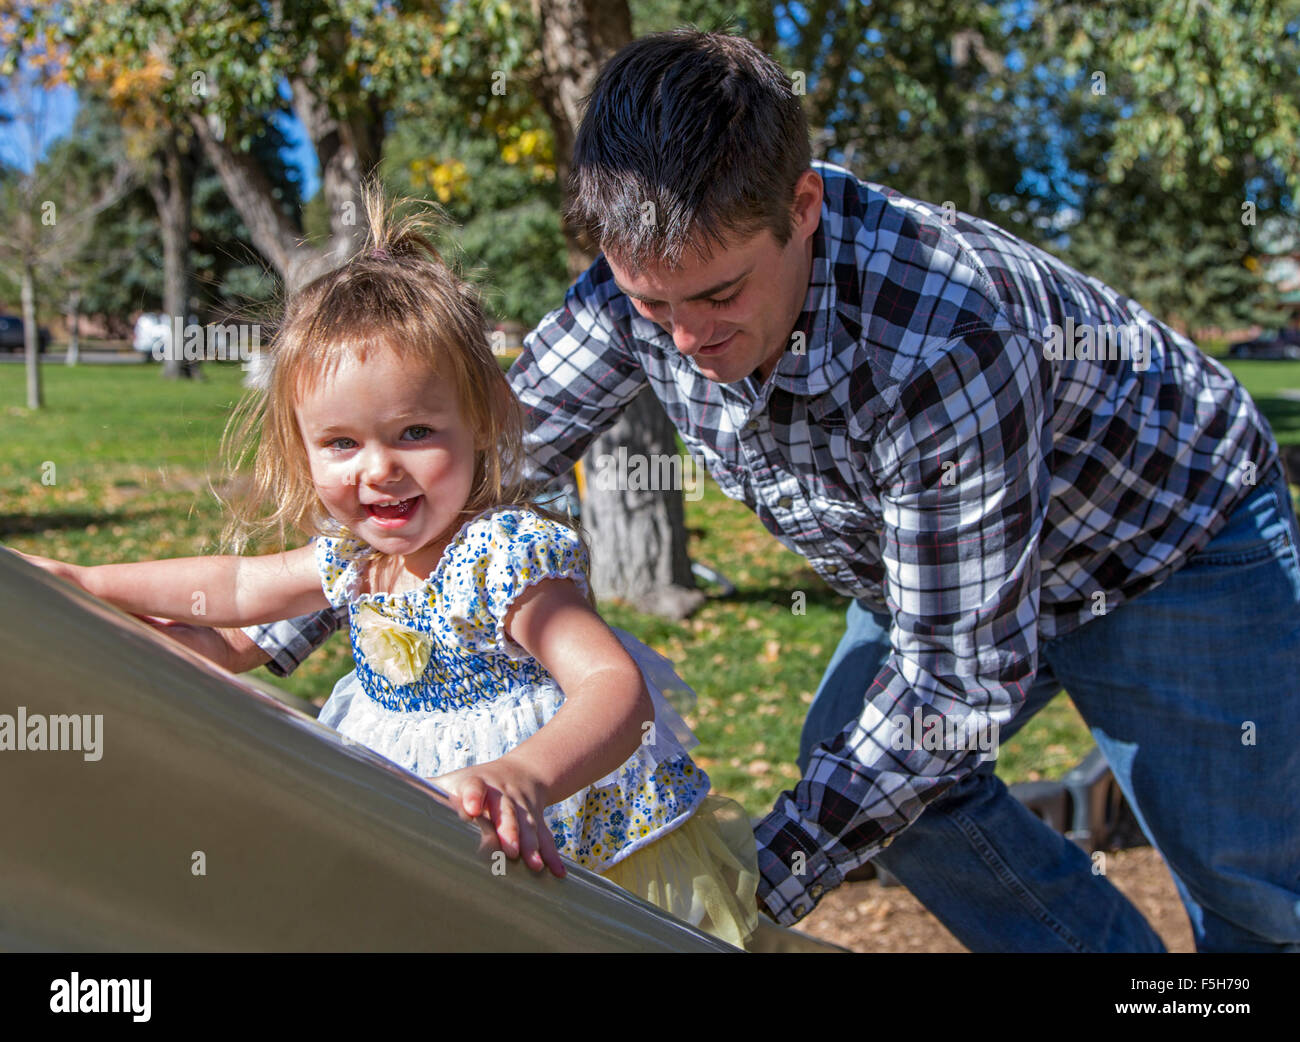 Padre e hija joven jugando en una mesa deslizante, parque infantil Foto de stock